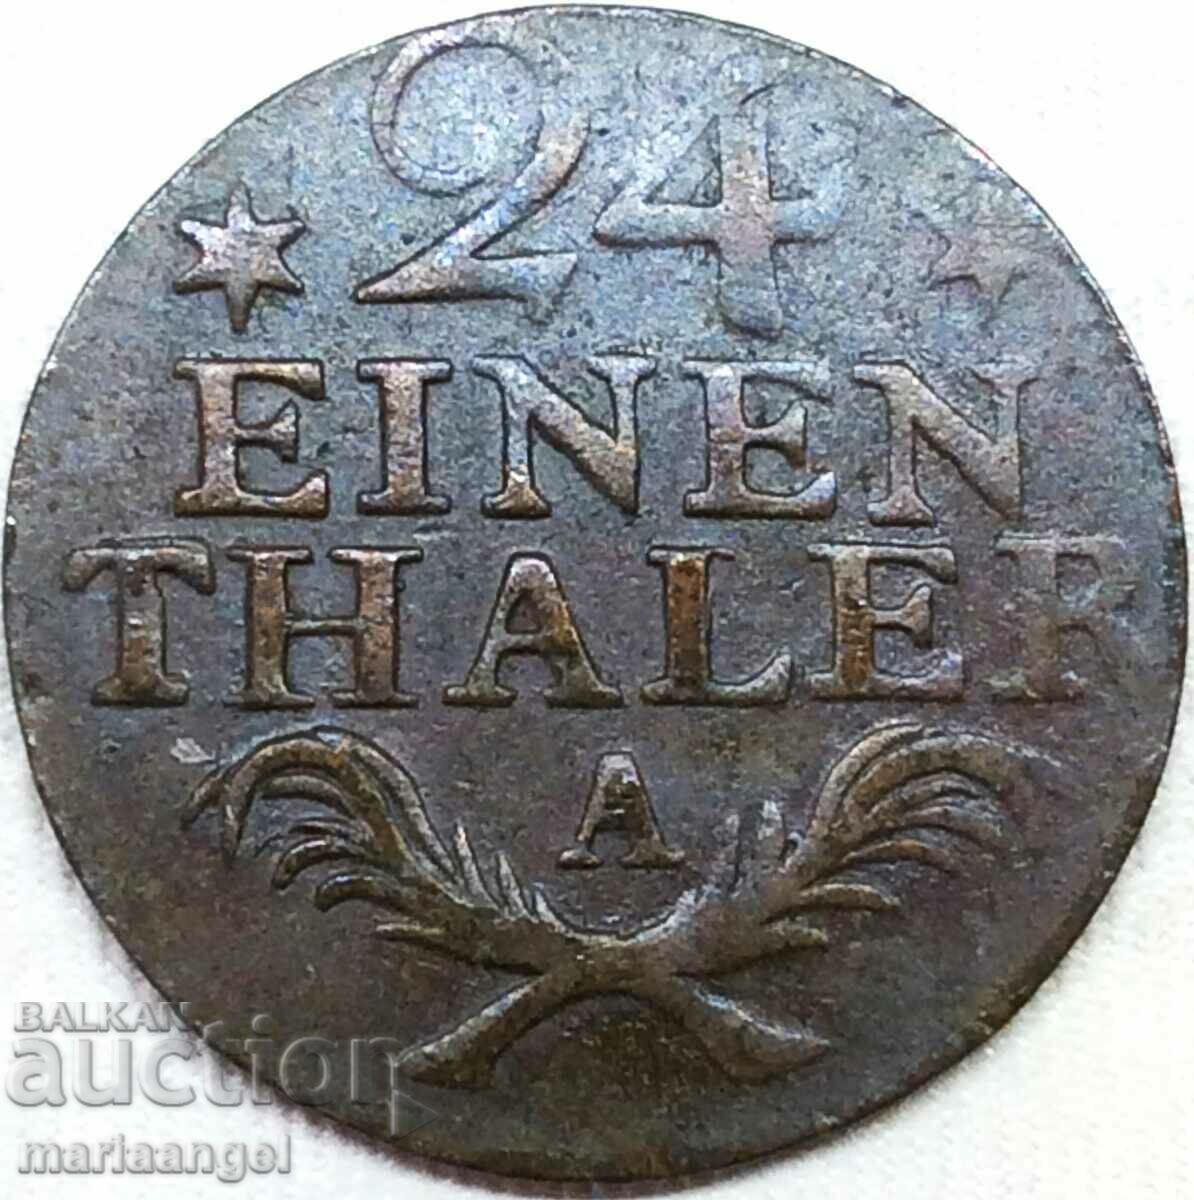 1/24 thaler 1782 Βραδεμβούργο Πρωσία Γερμανία billon